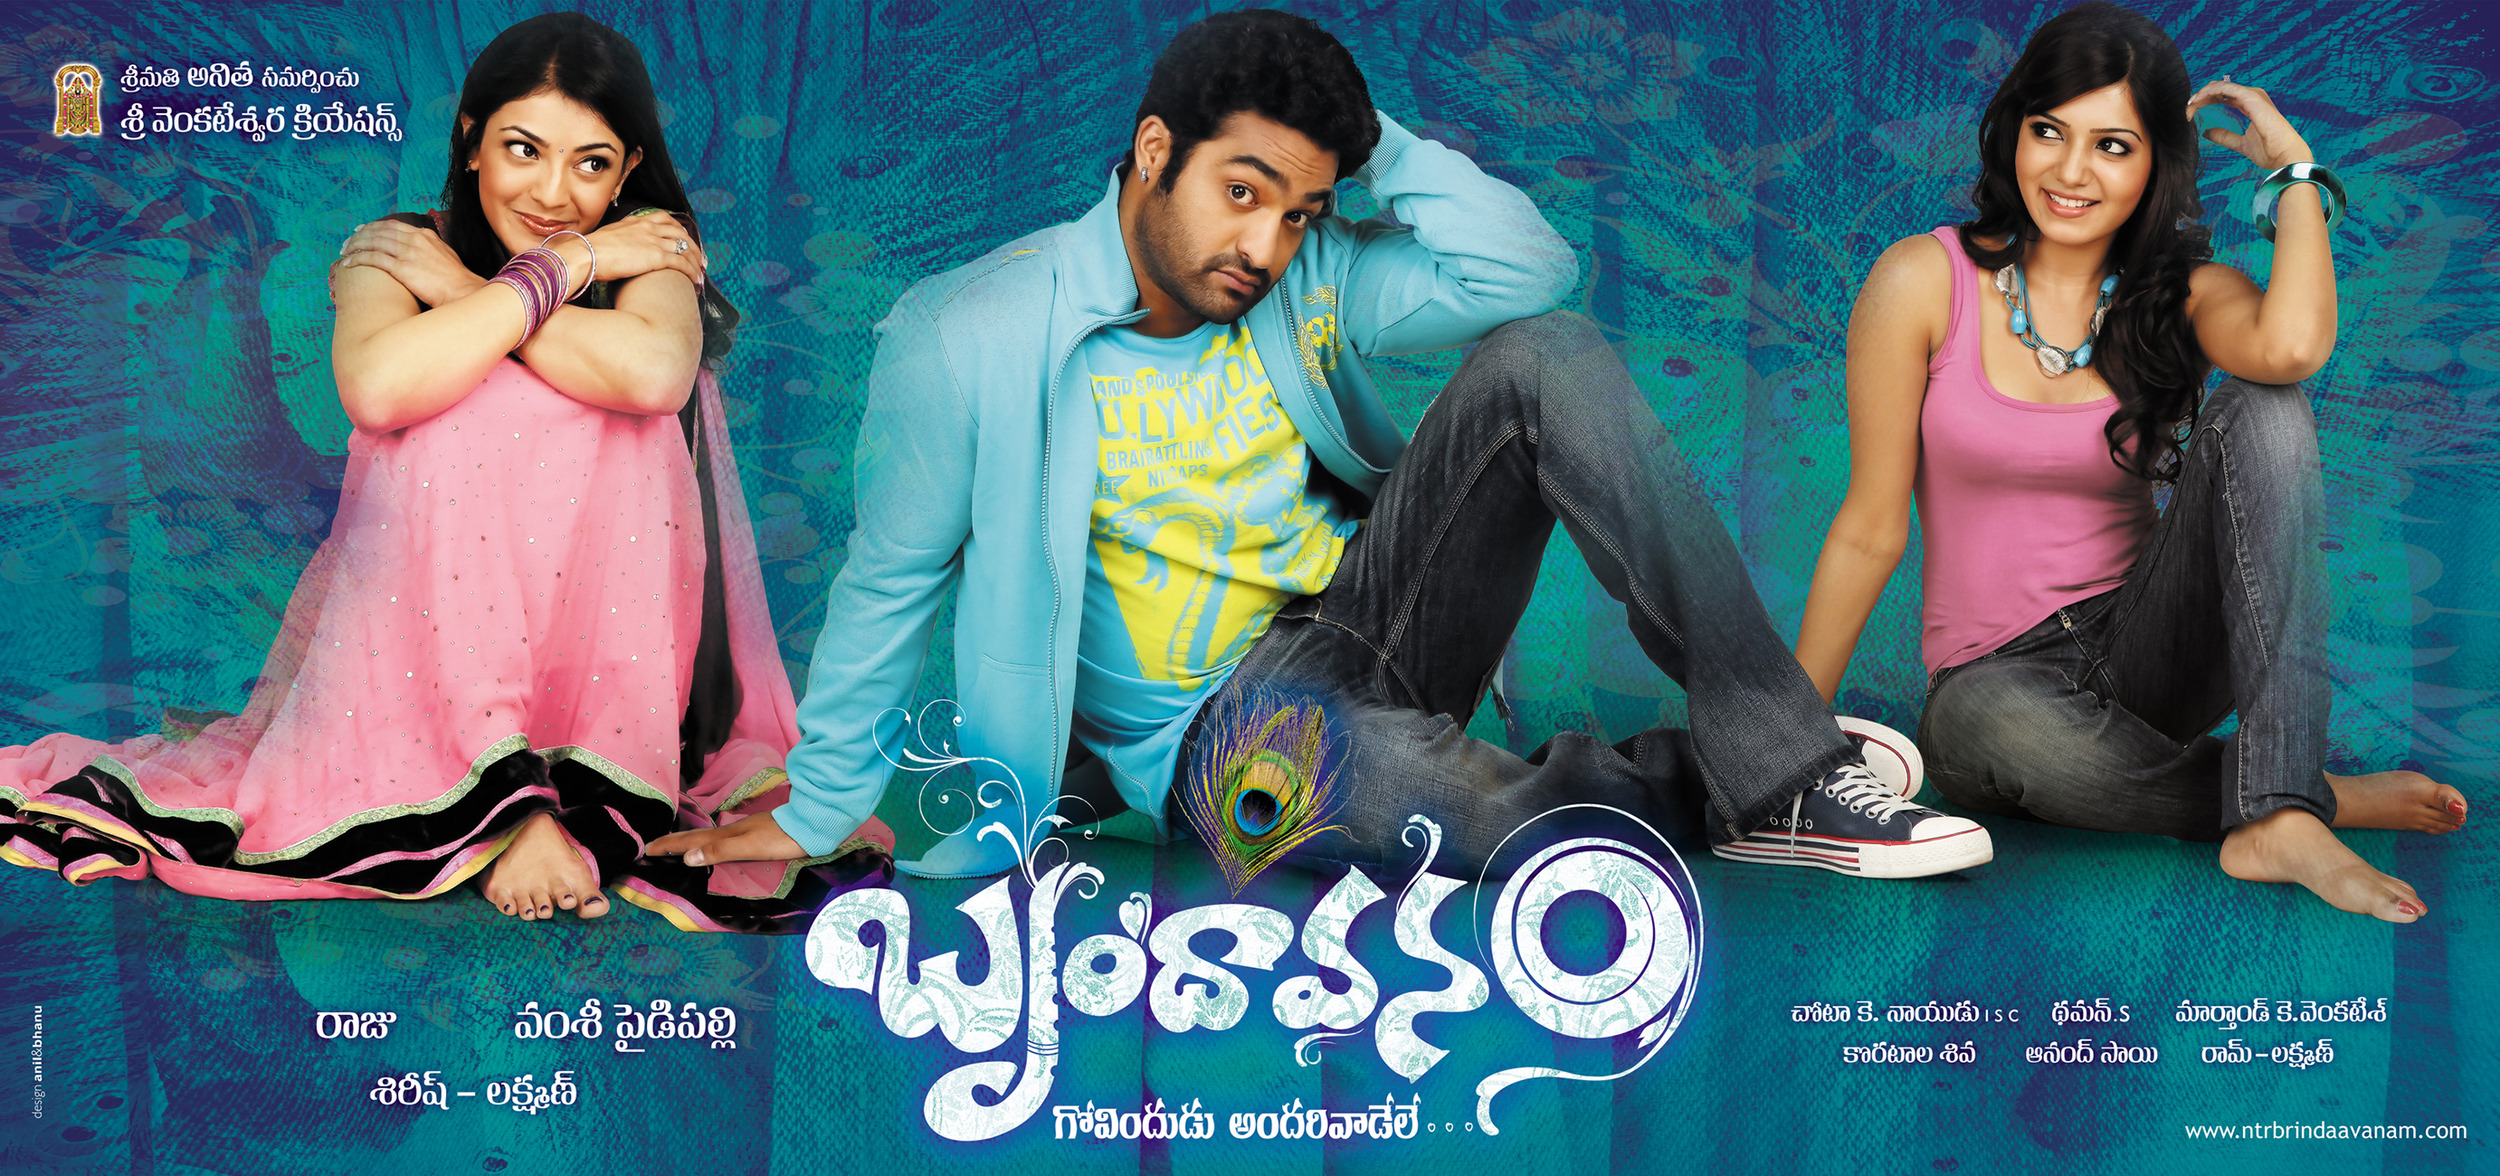 Mega Sized Movie Poster Image for Brindaavanam (#13 of 14)